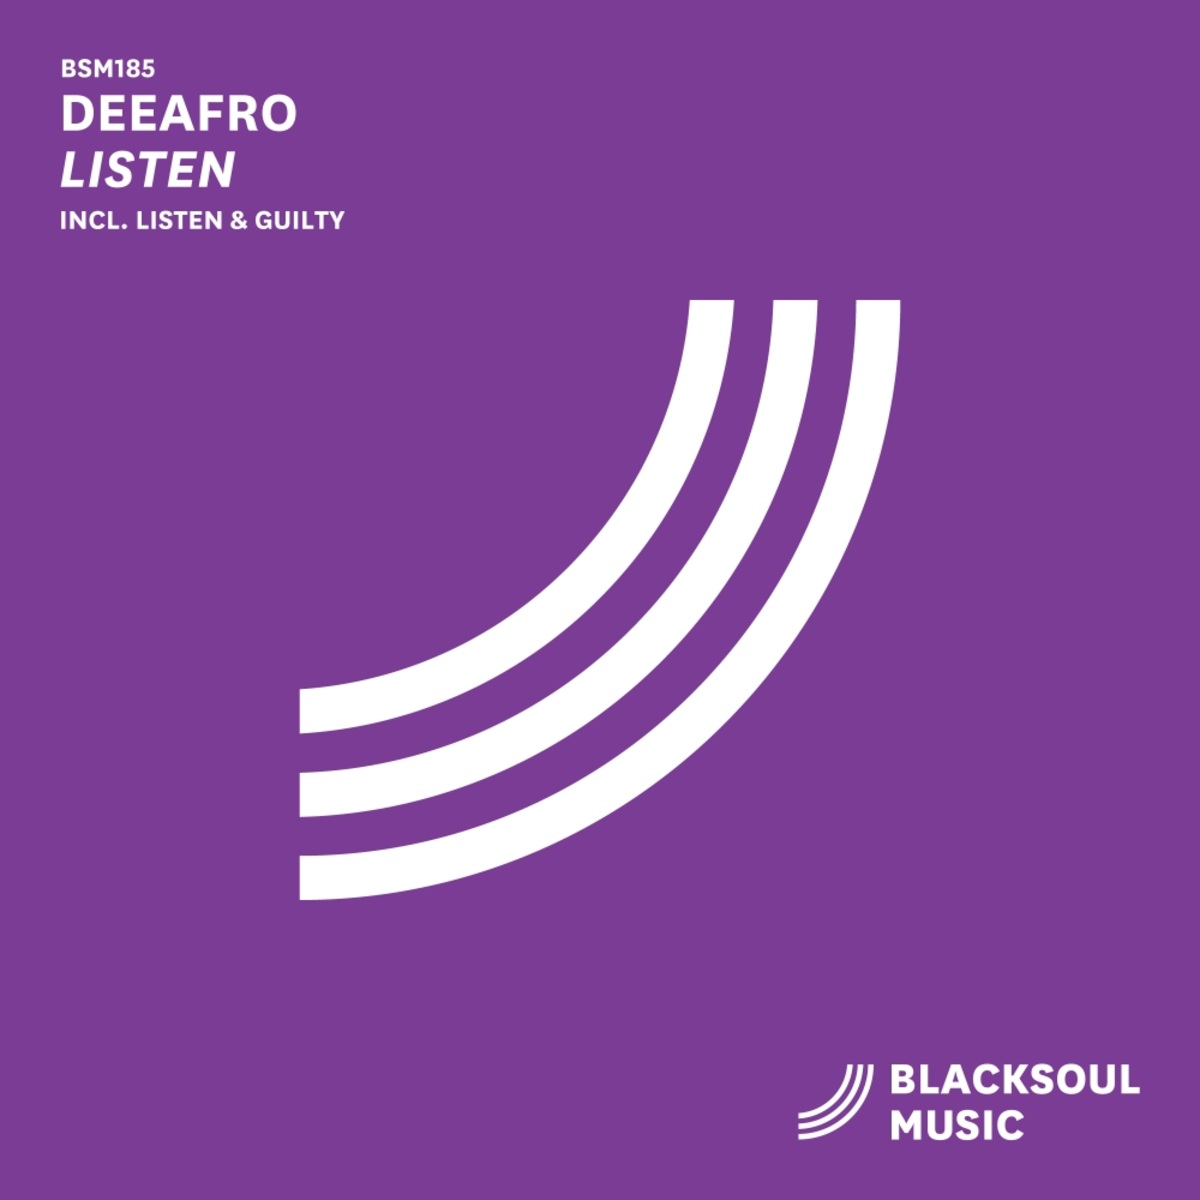 DeeAfro - Listen / Blacksoul Music